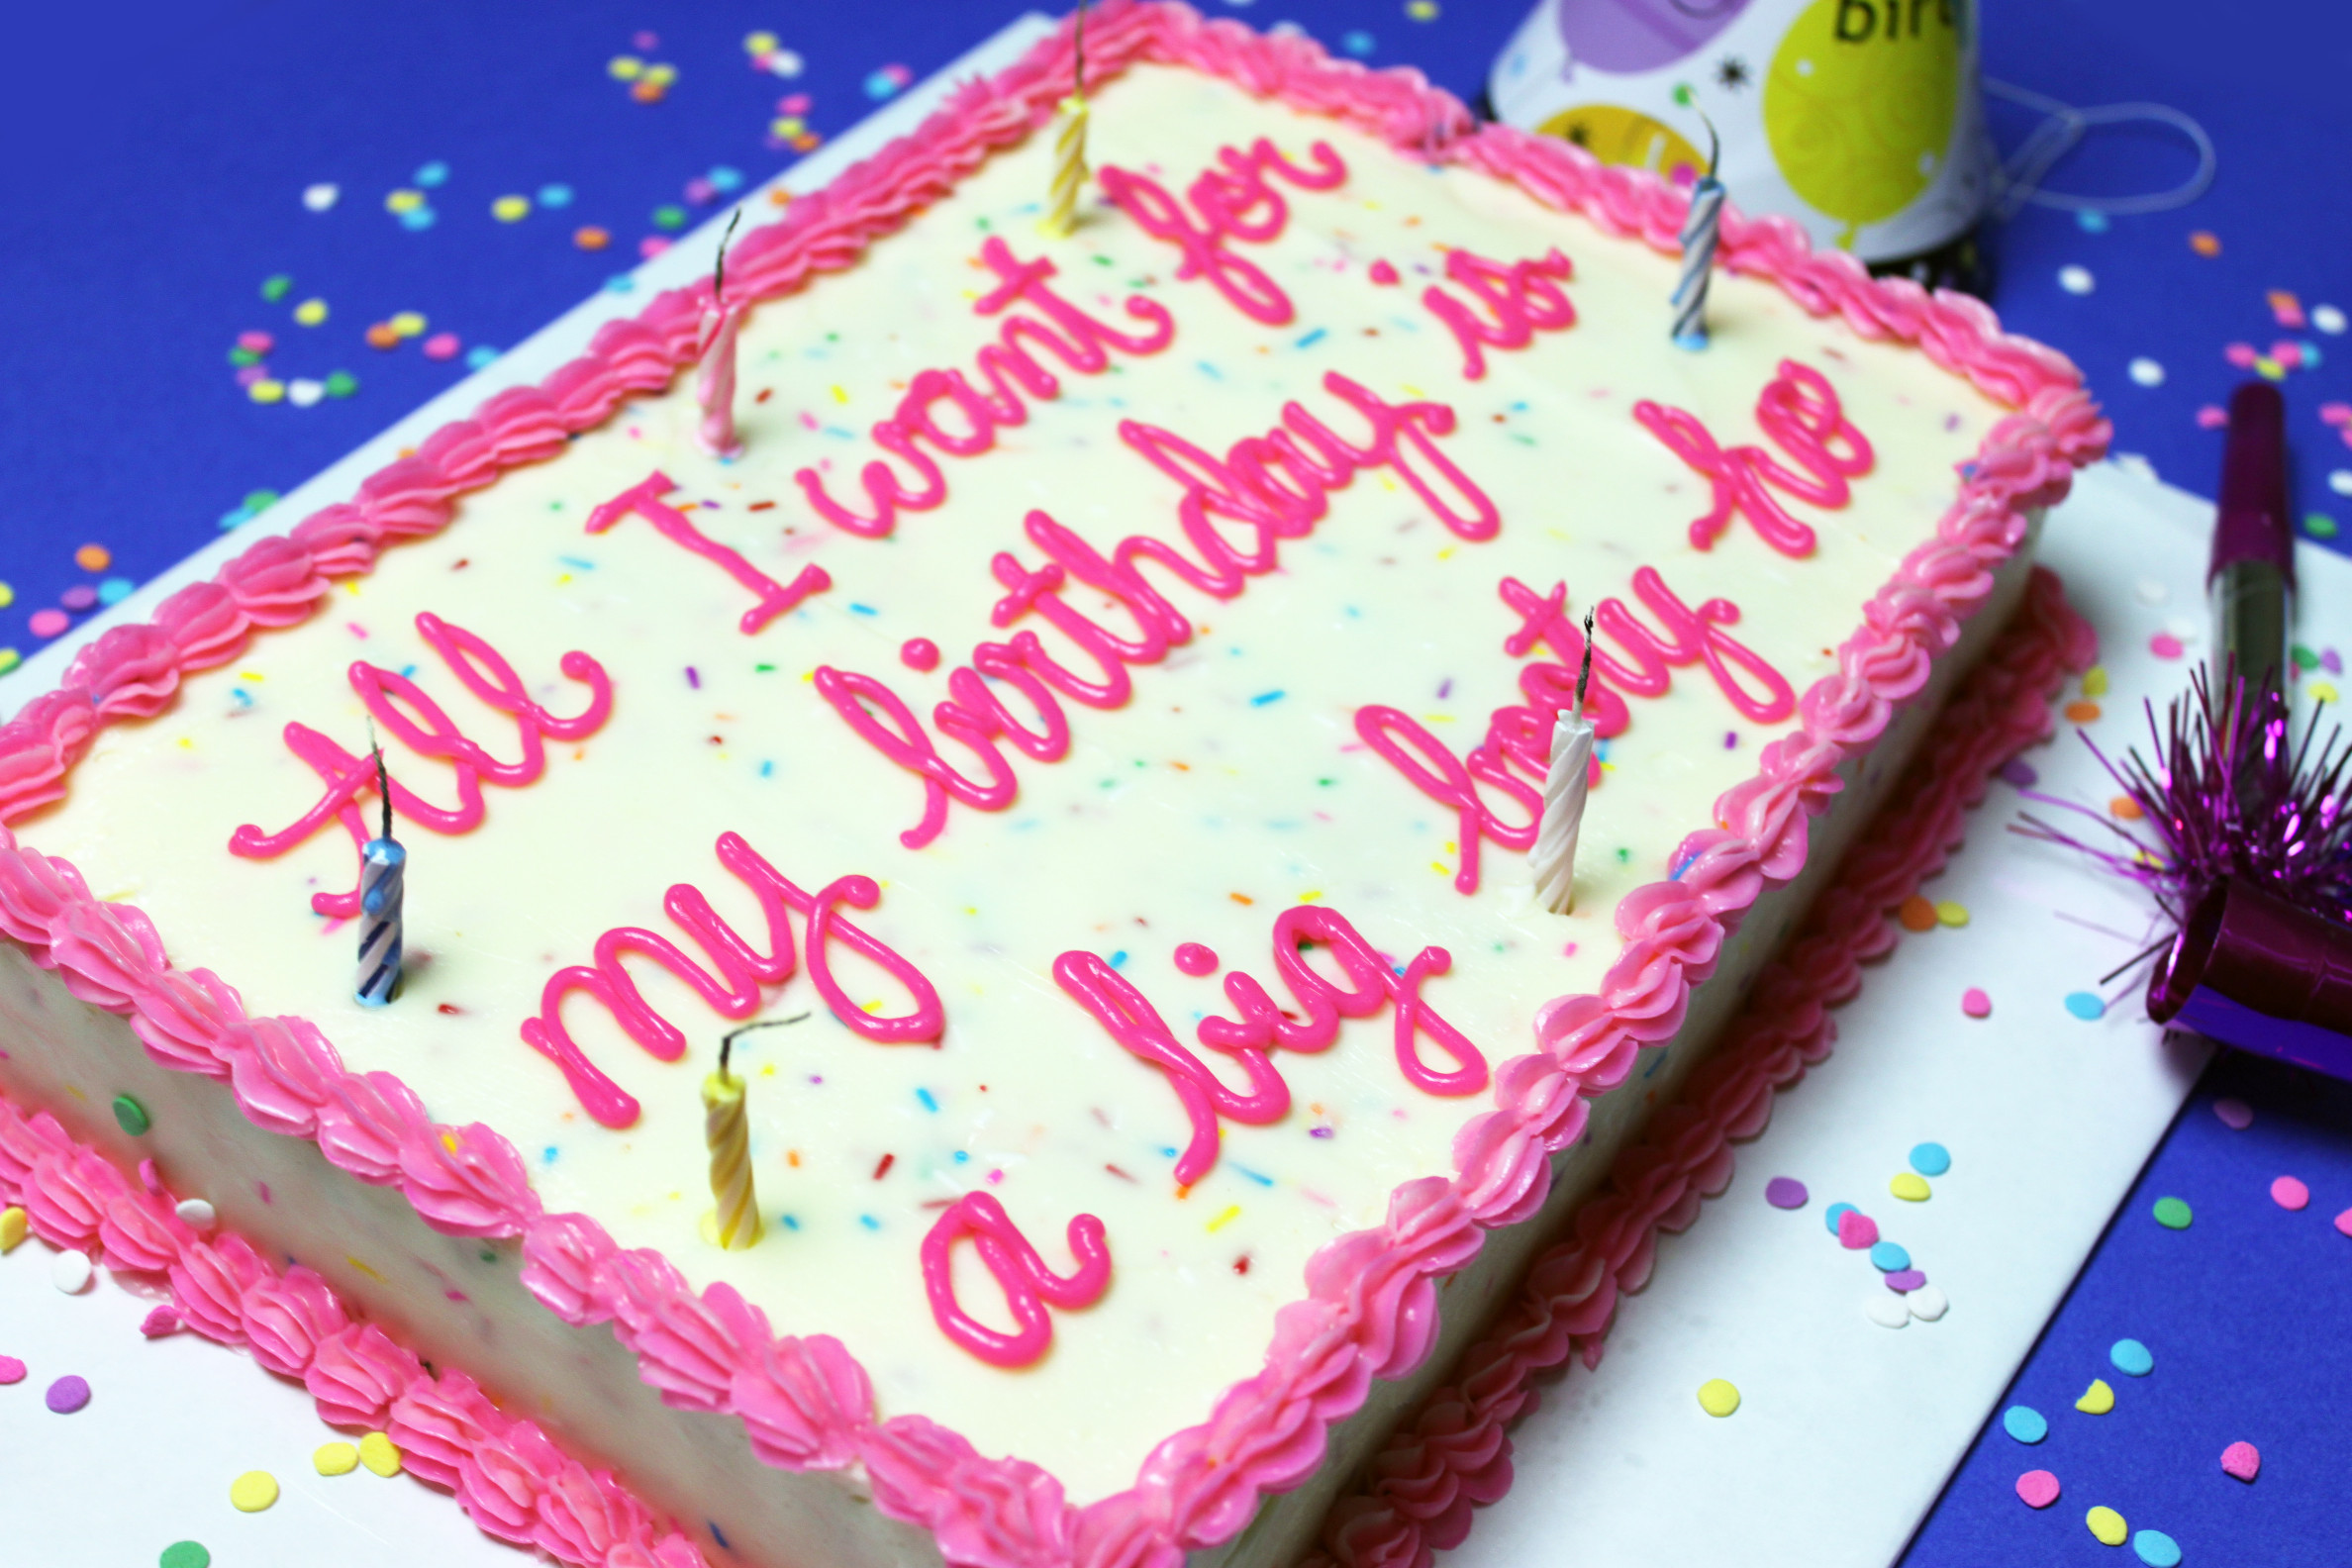 Birthday Cake Lyrics
 Iconic Butt Lyrics on Cakes